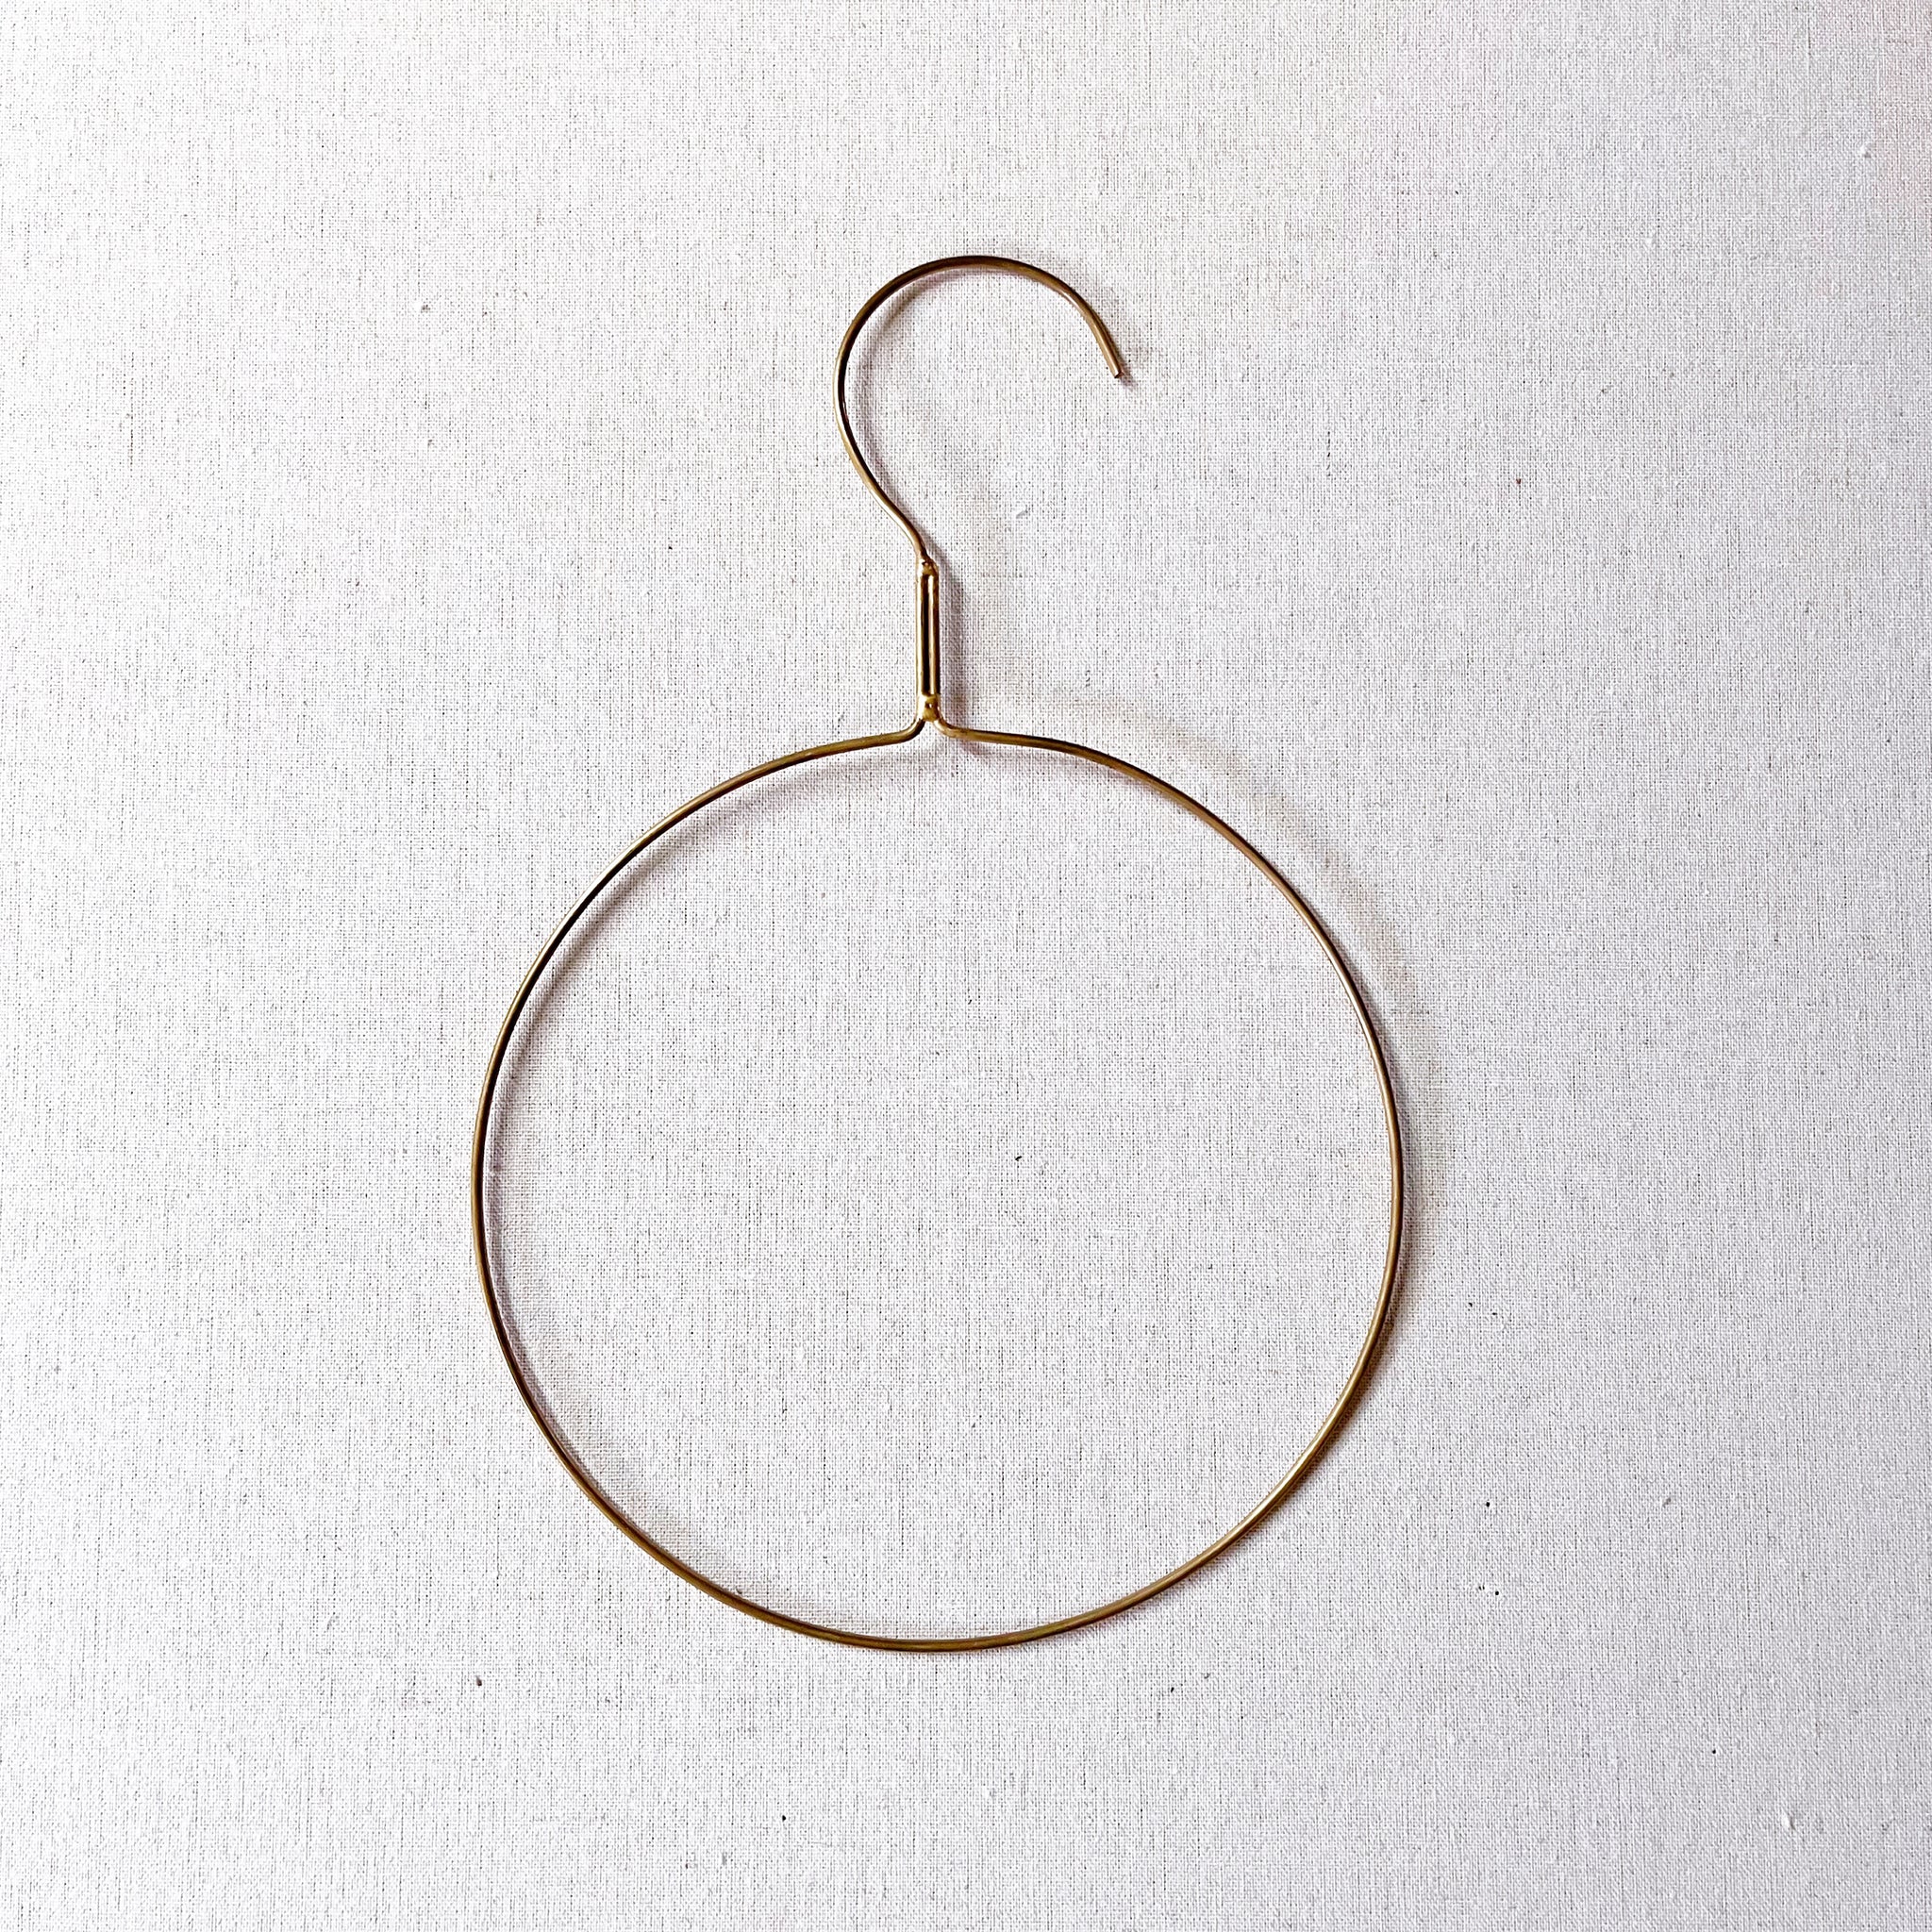 Brass Hanger - Circle or Rectangle